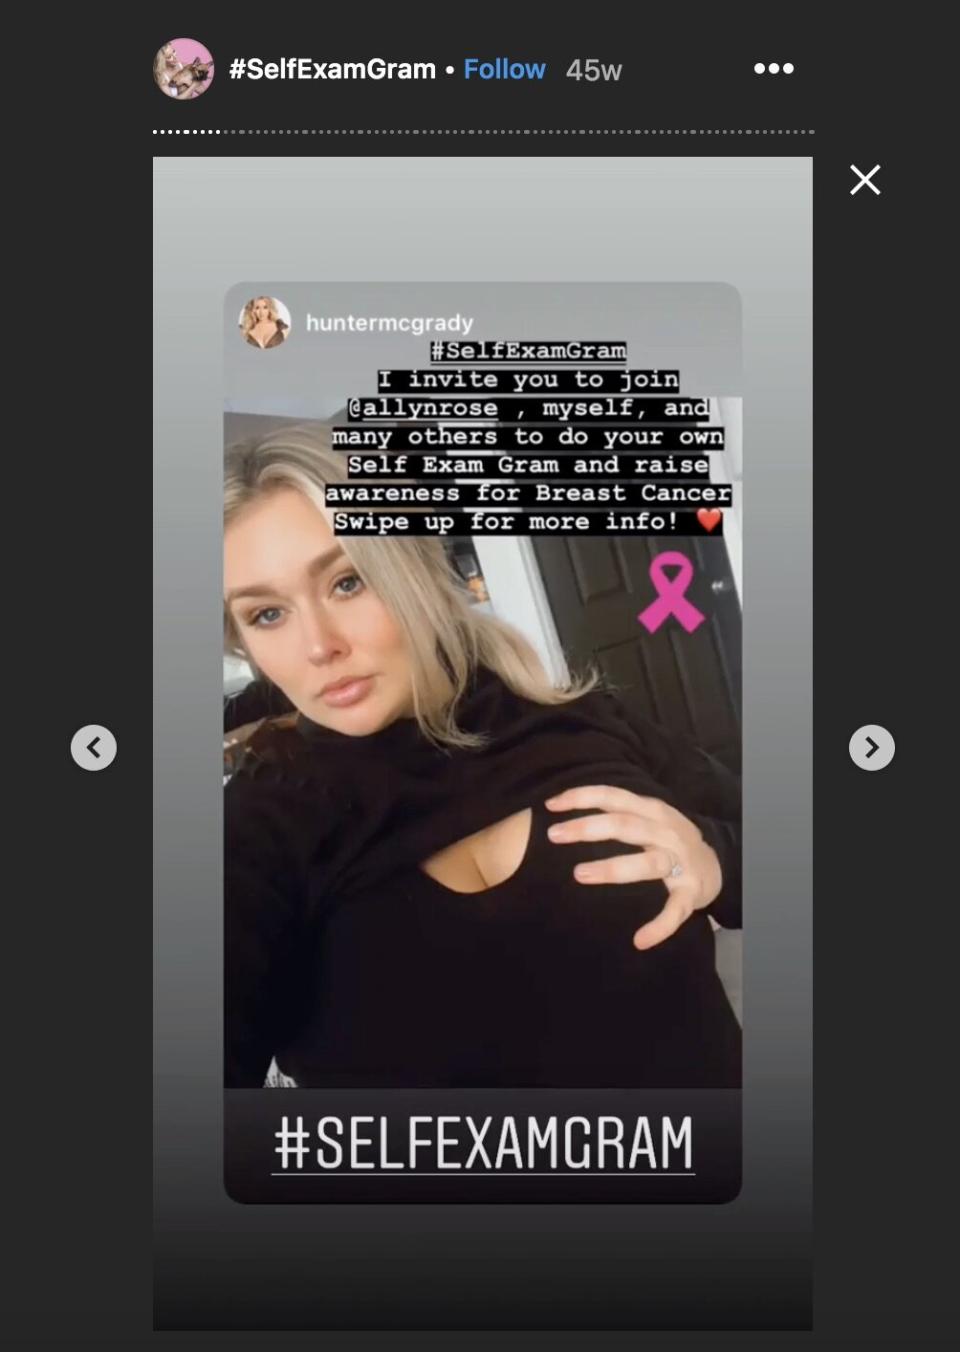 Allyn Rose's screenshot of Hunter McGrady sharing a #SelfExamGram on Instagram